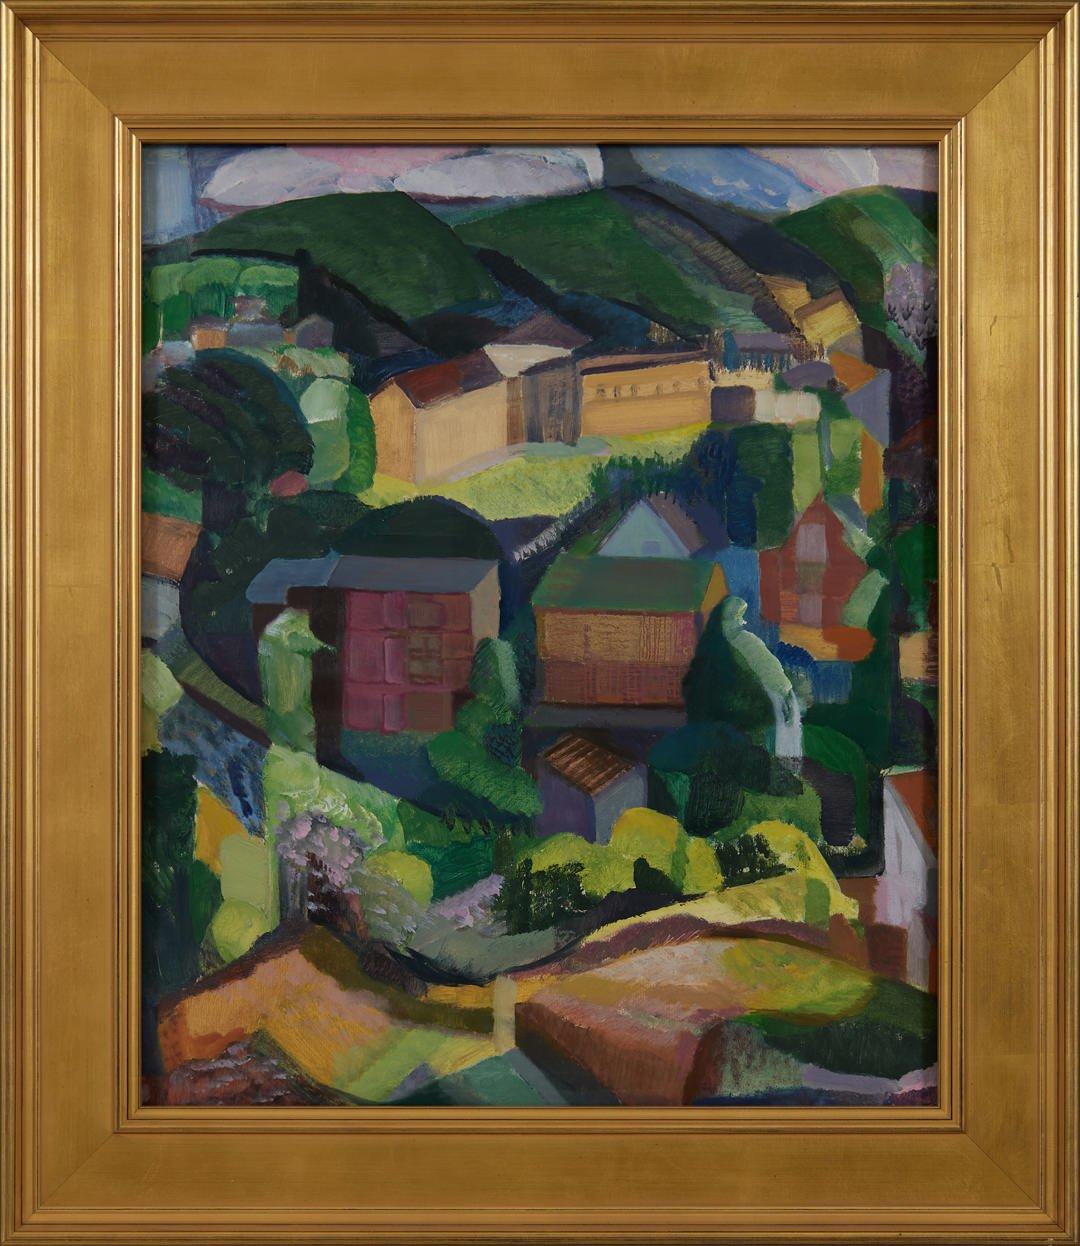 Gloucester Houses & Backyards, c. 1935 colorful cubist landscape, female artist - Painting by Clara Deike